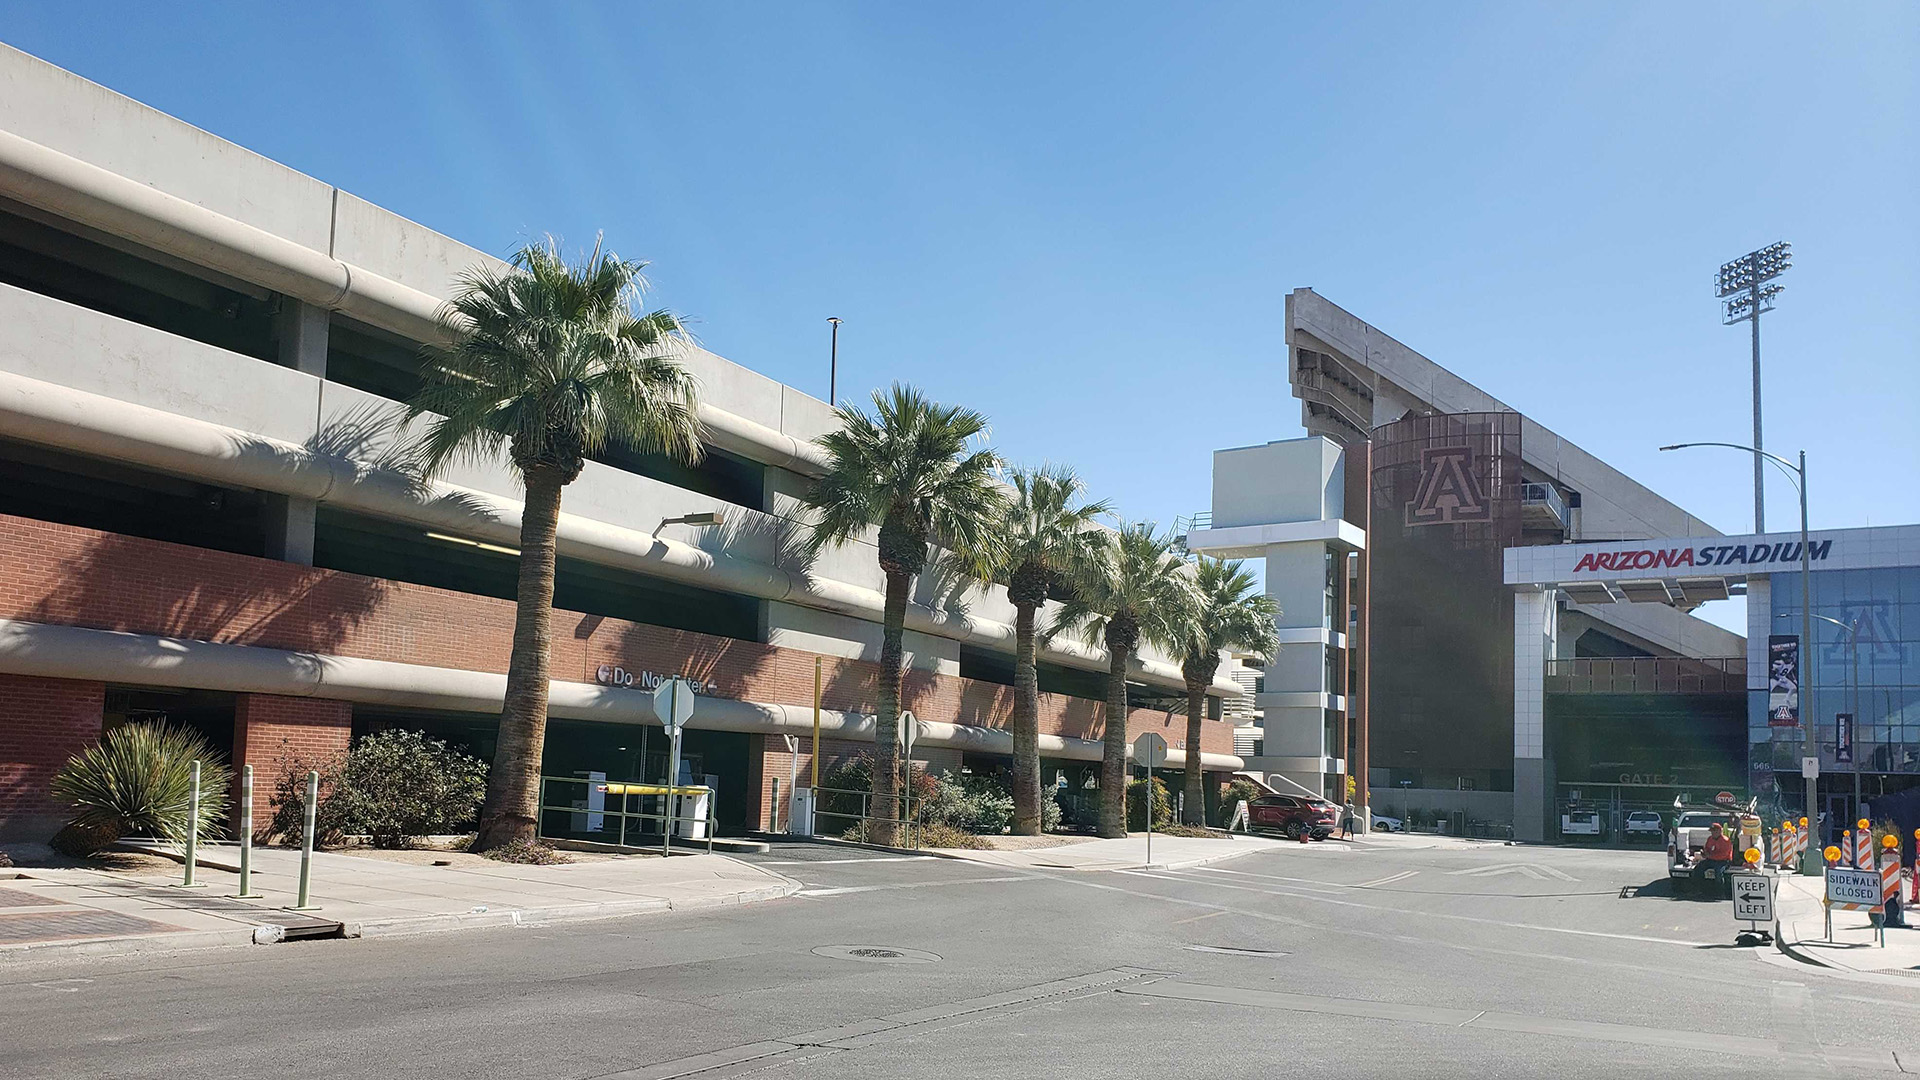 The Cherry Avenue Garage is beside the University of Arizona McKale Memorial Center. 